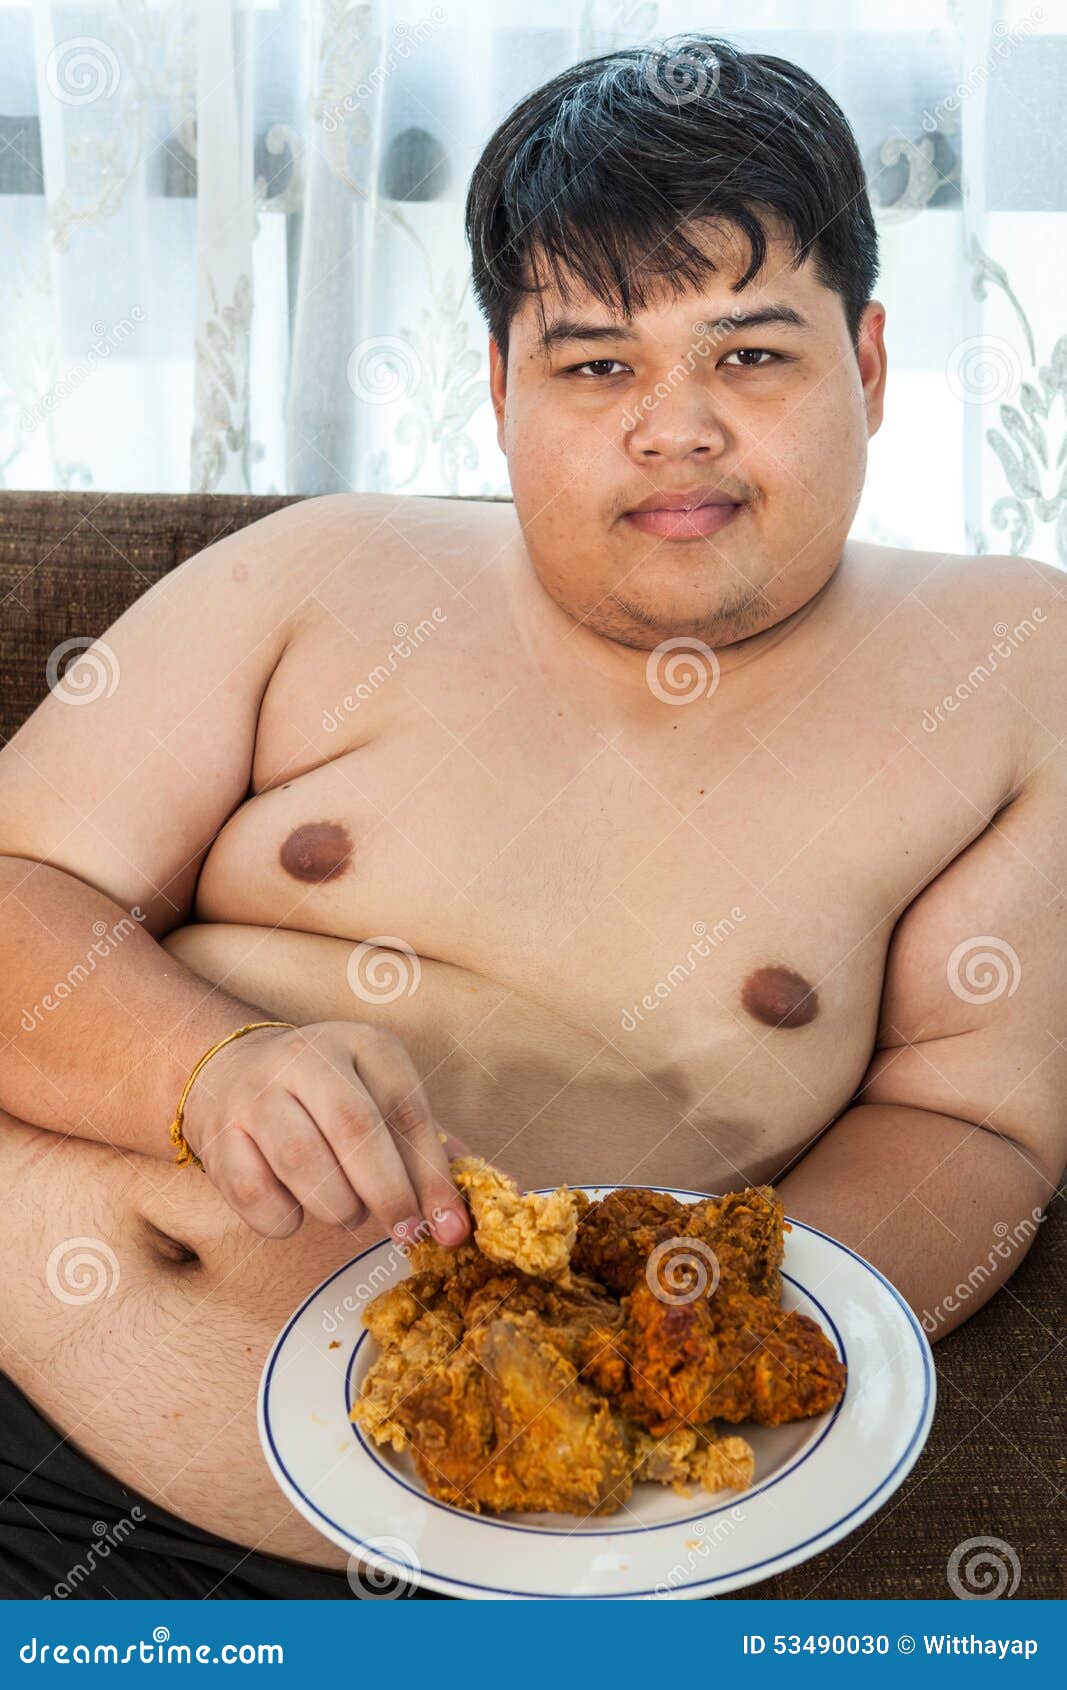 fat-man-eating-fried-chicken-asian-53490